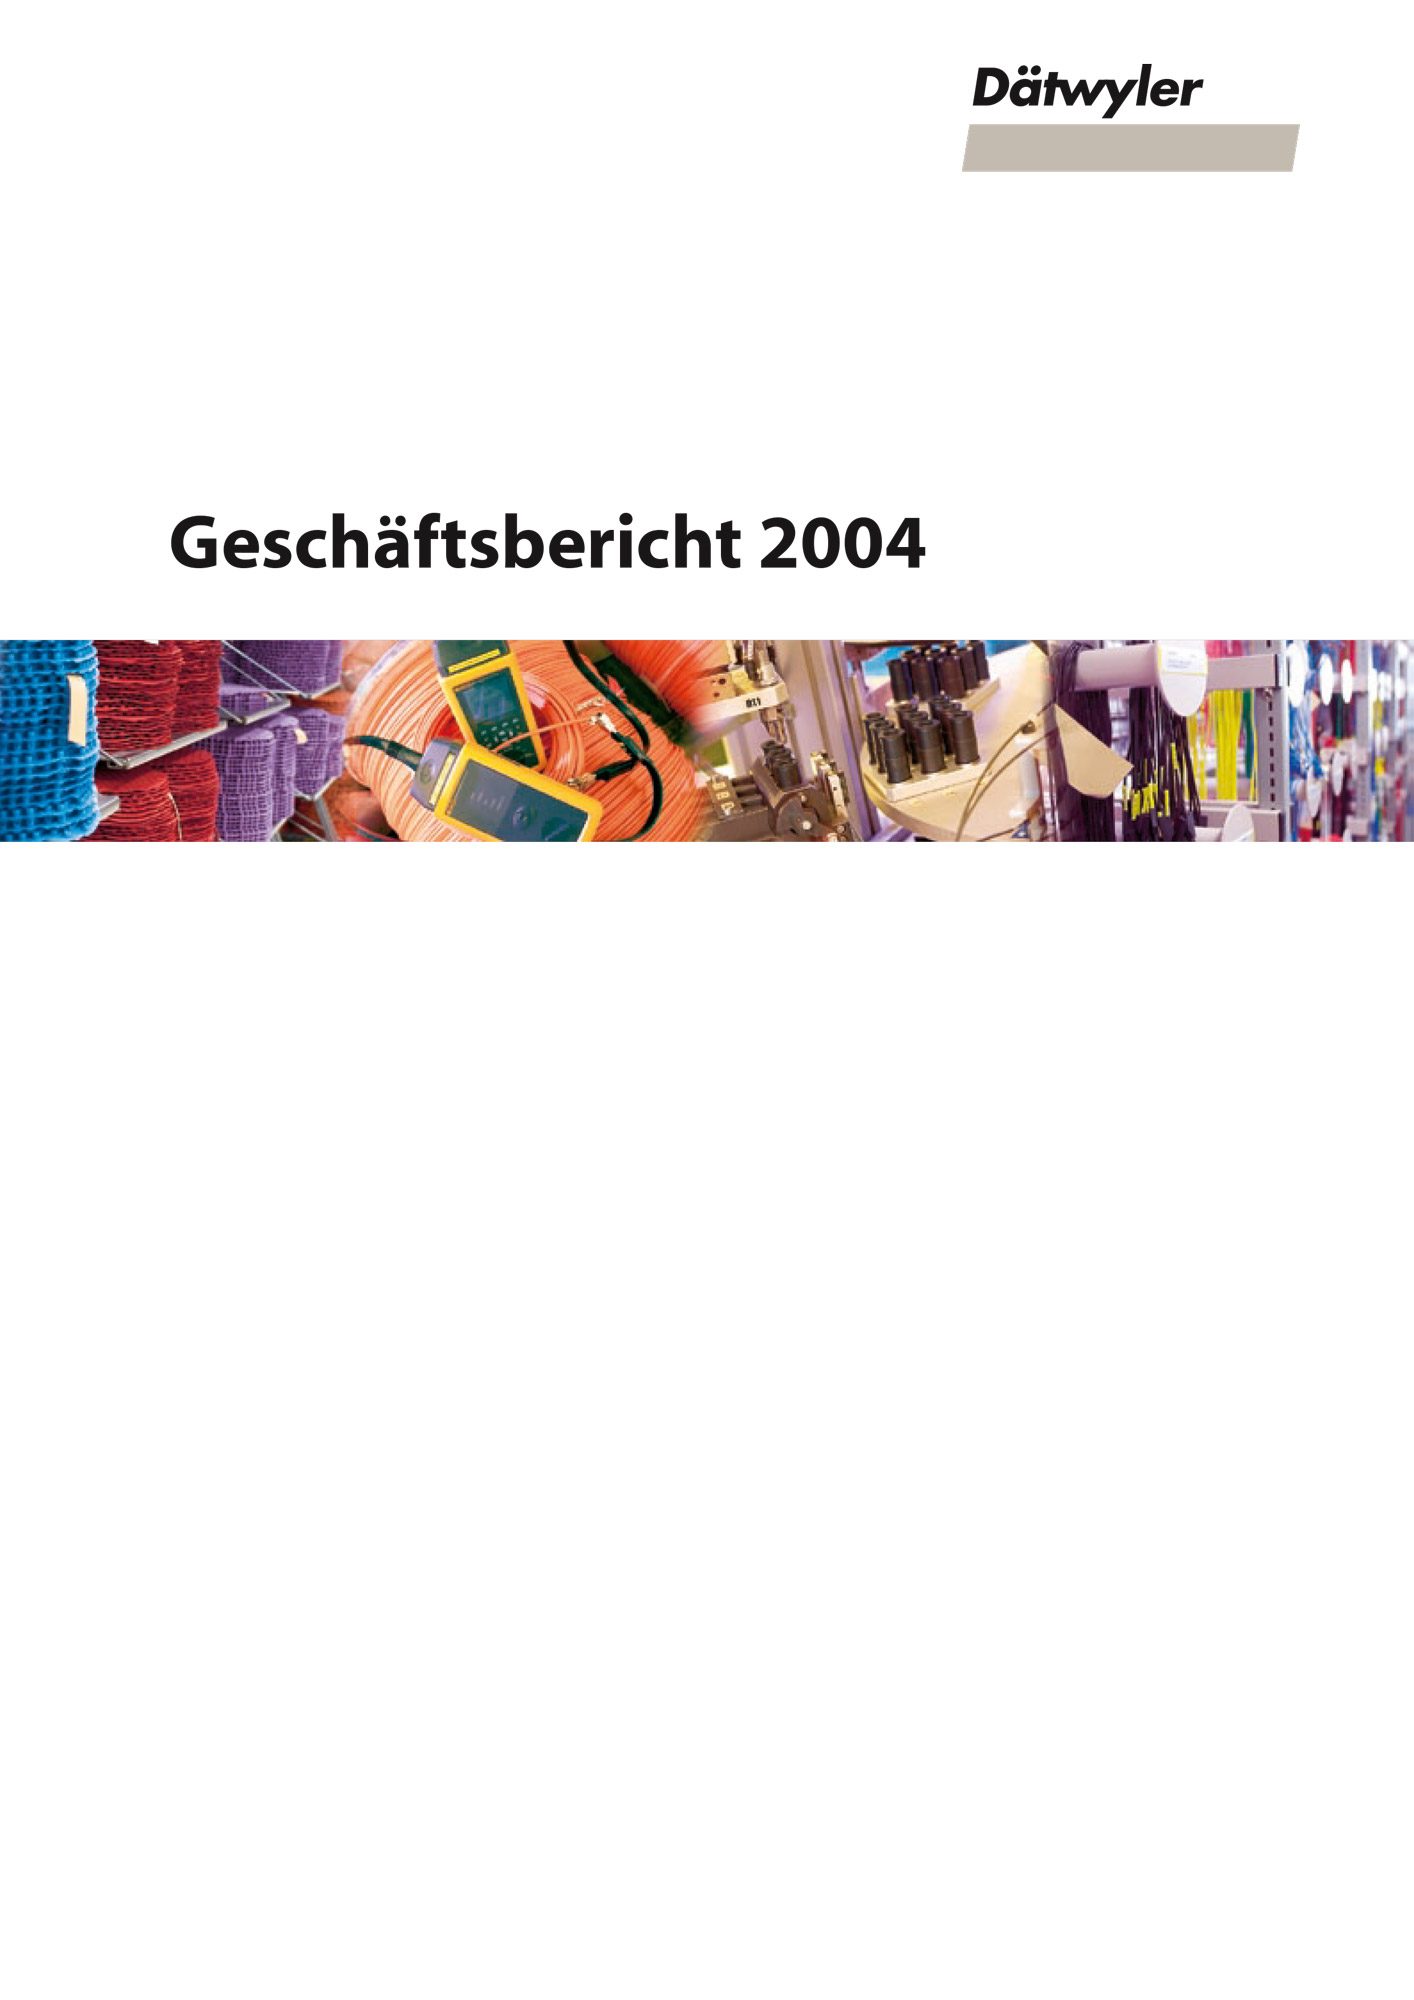 Annual Report 2004